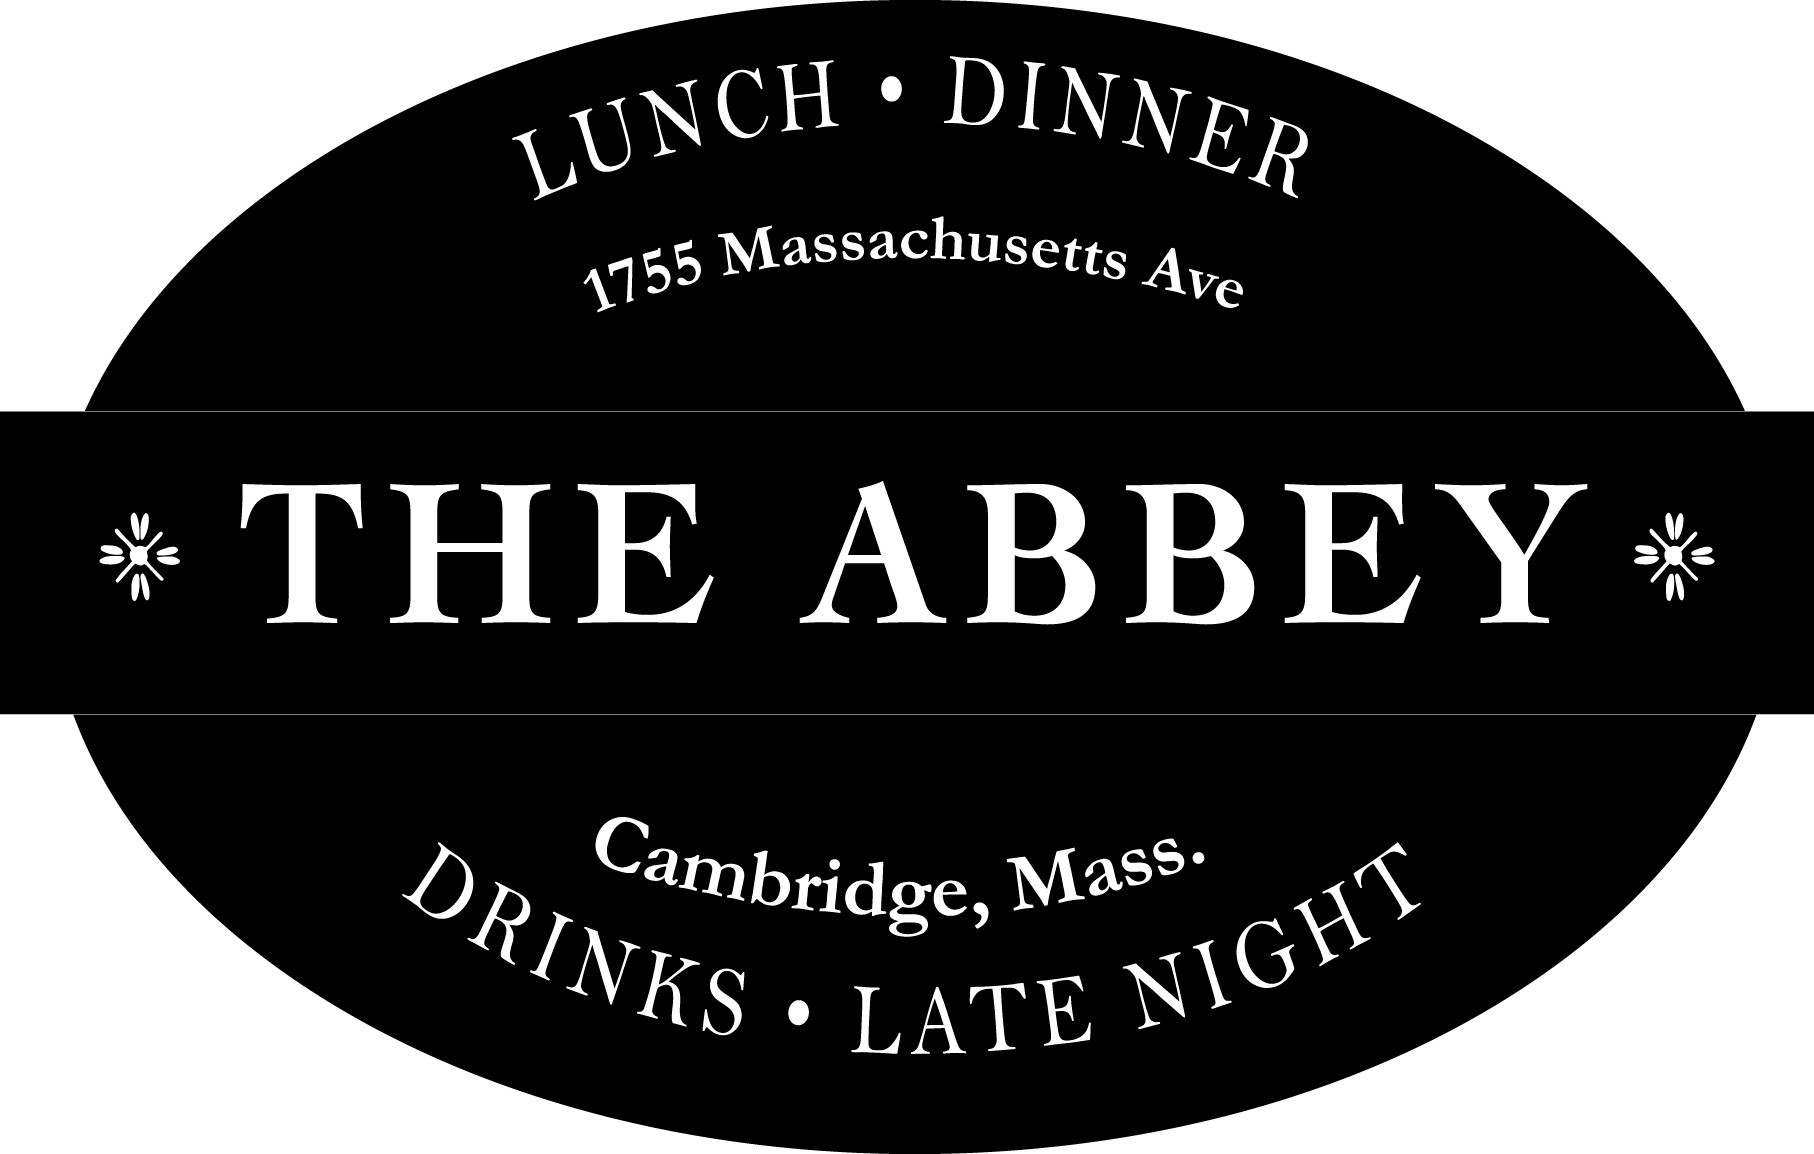 The Abbey - 1755 Massachusetts Avenue,